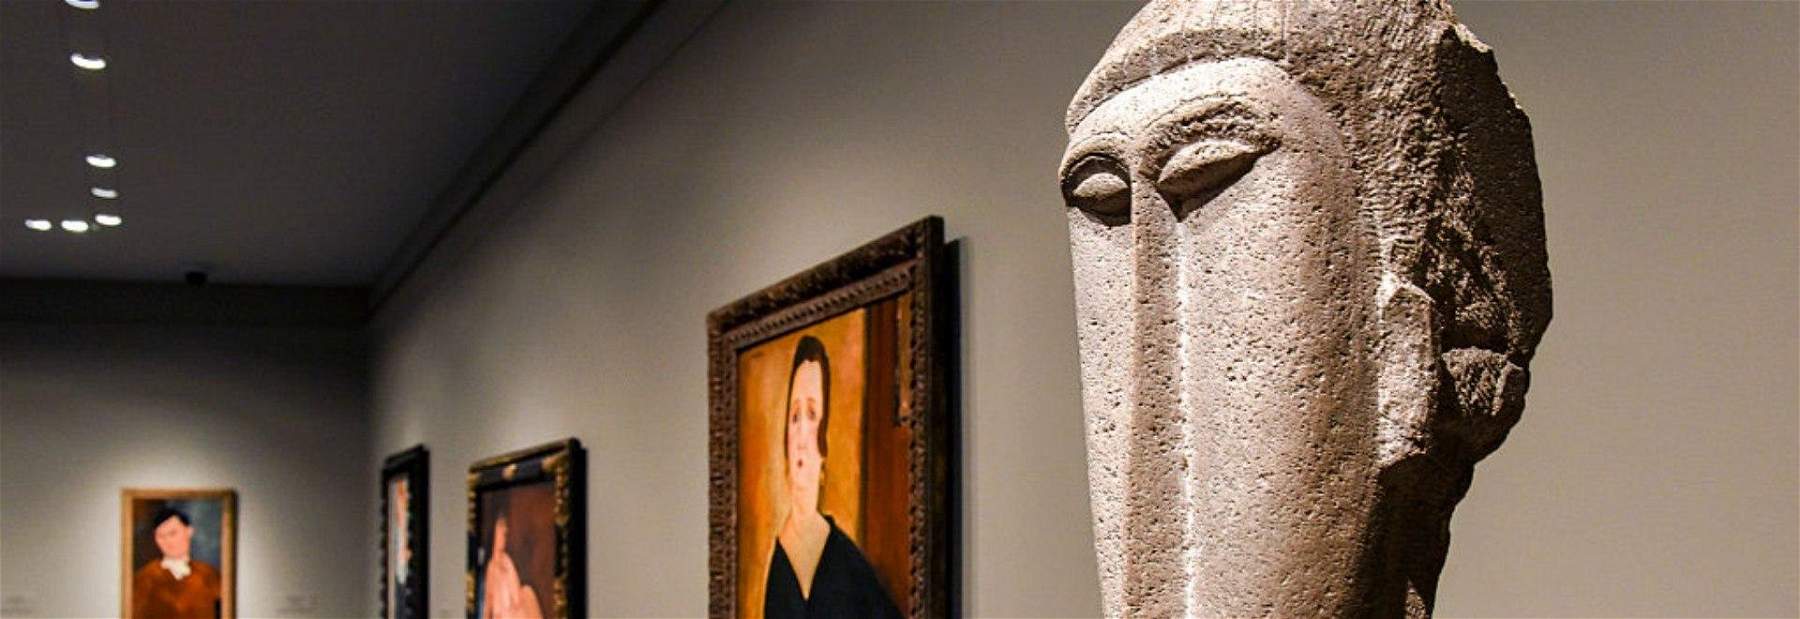 Art on TV Nov. 8-14: Modigliani, Matisse and Leonardo da Vinci